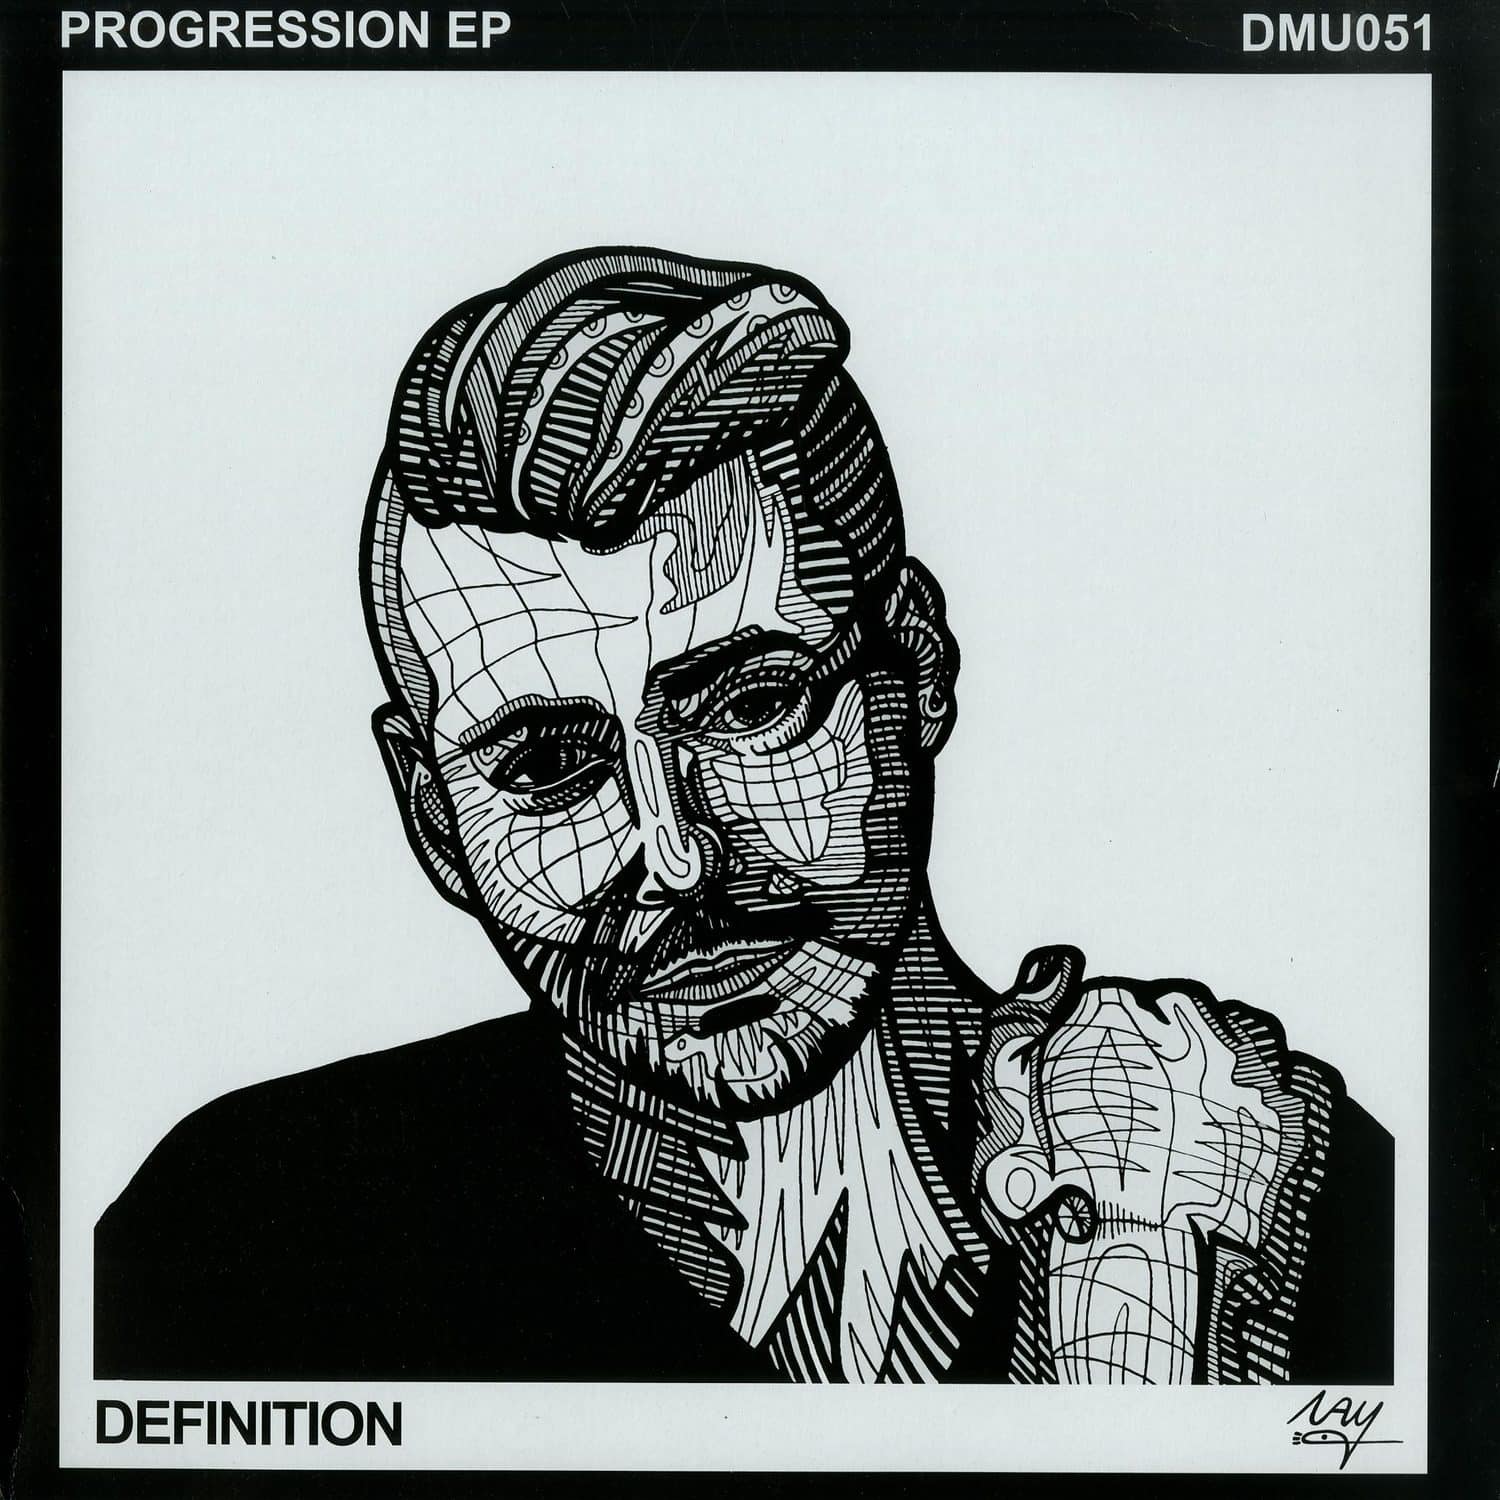 Definition - PROGRESSION EP 